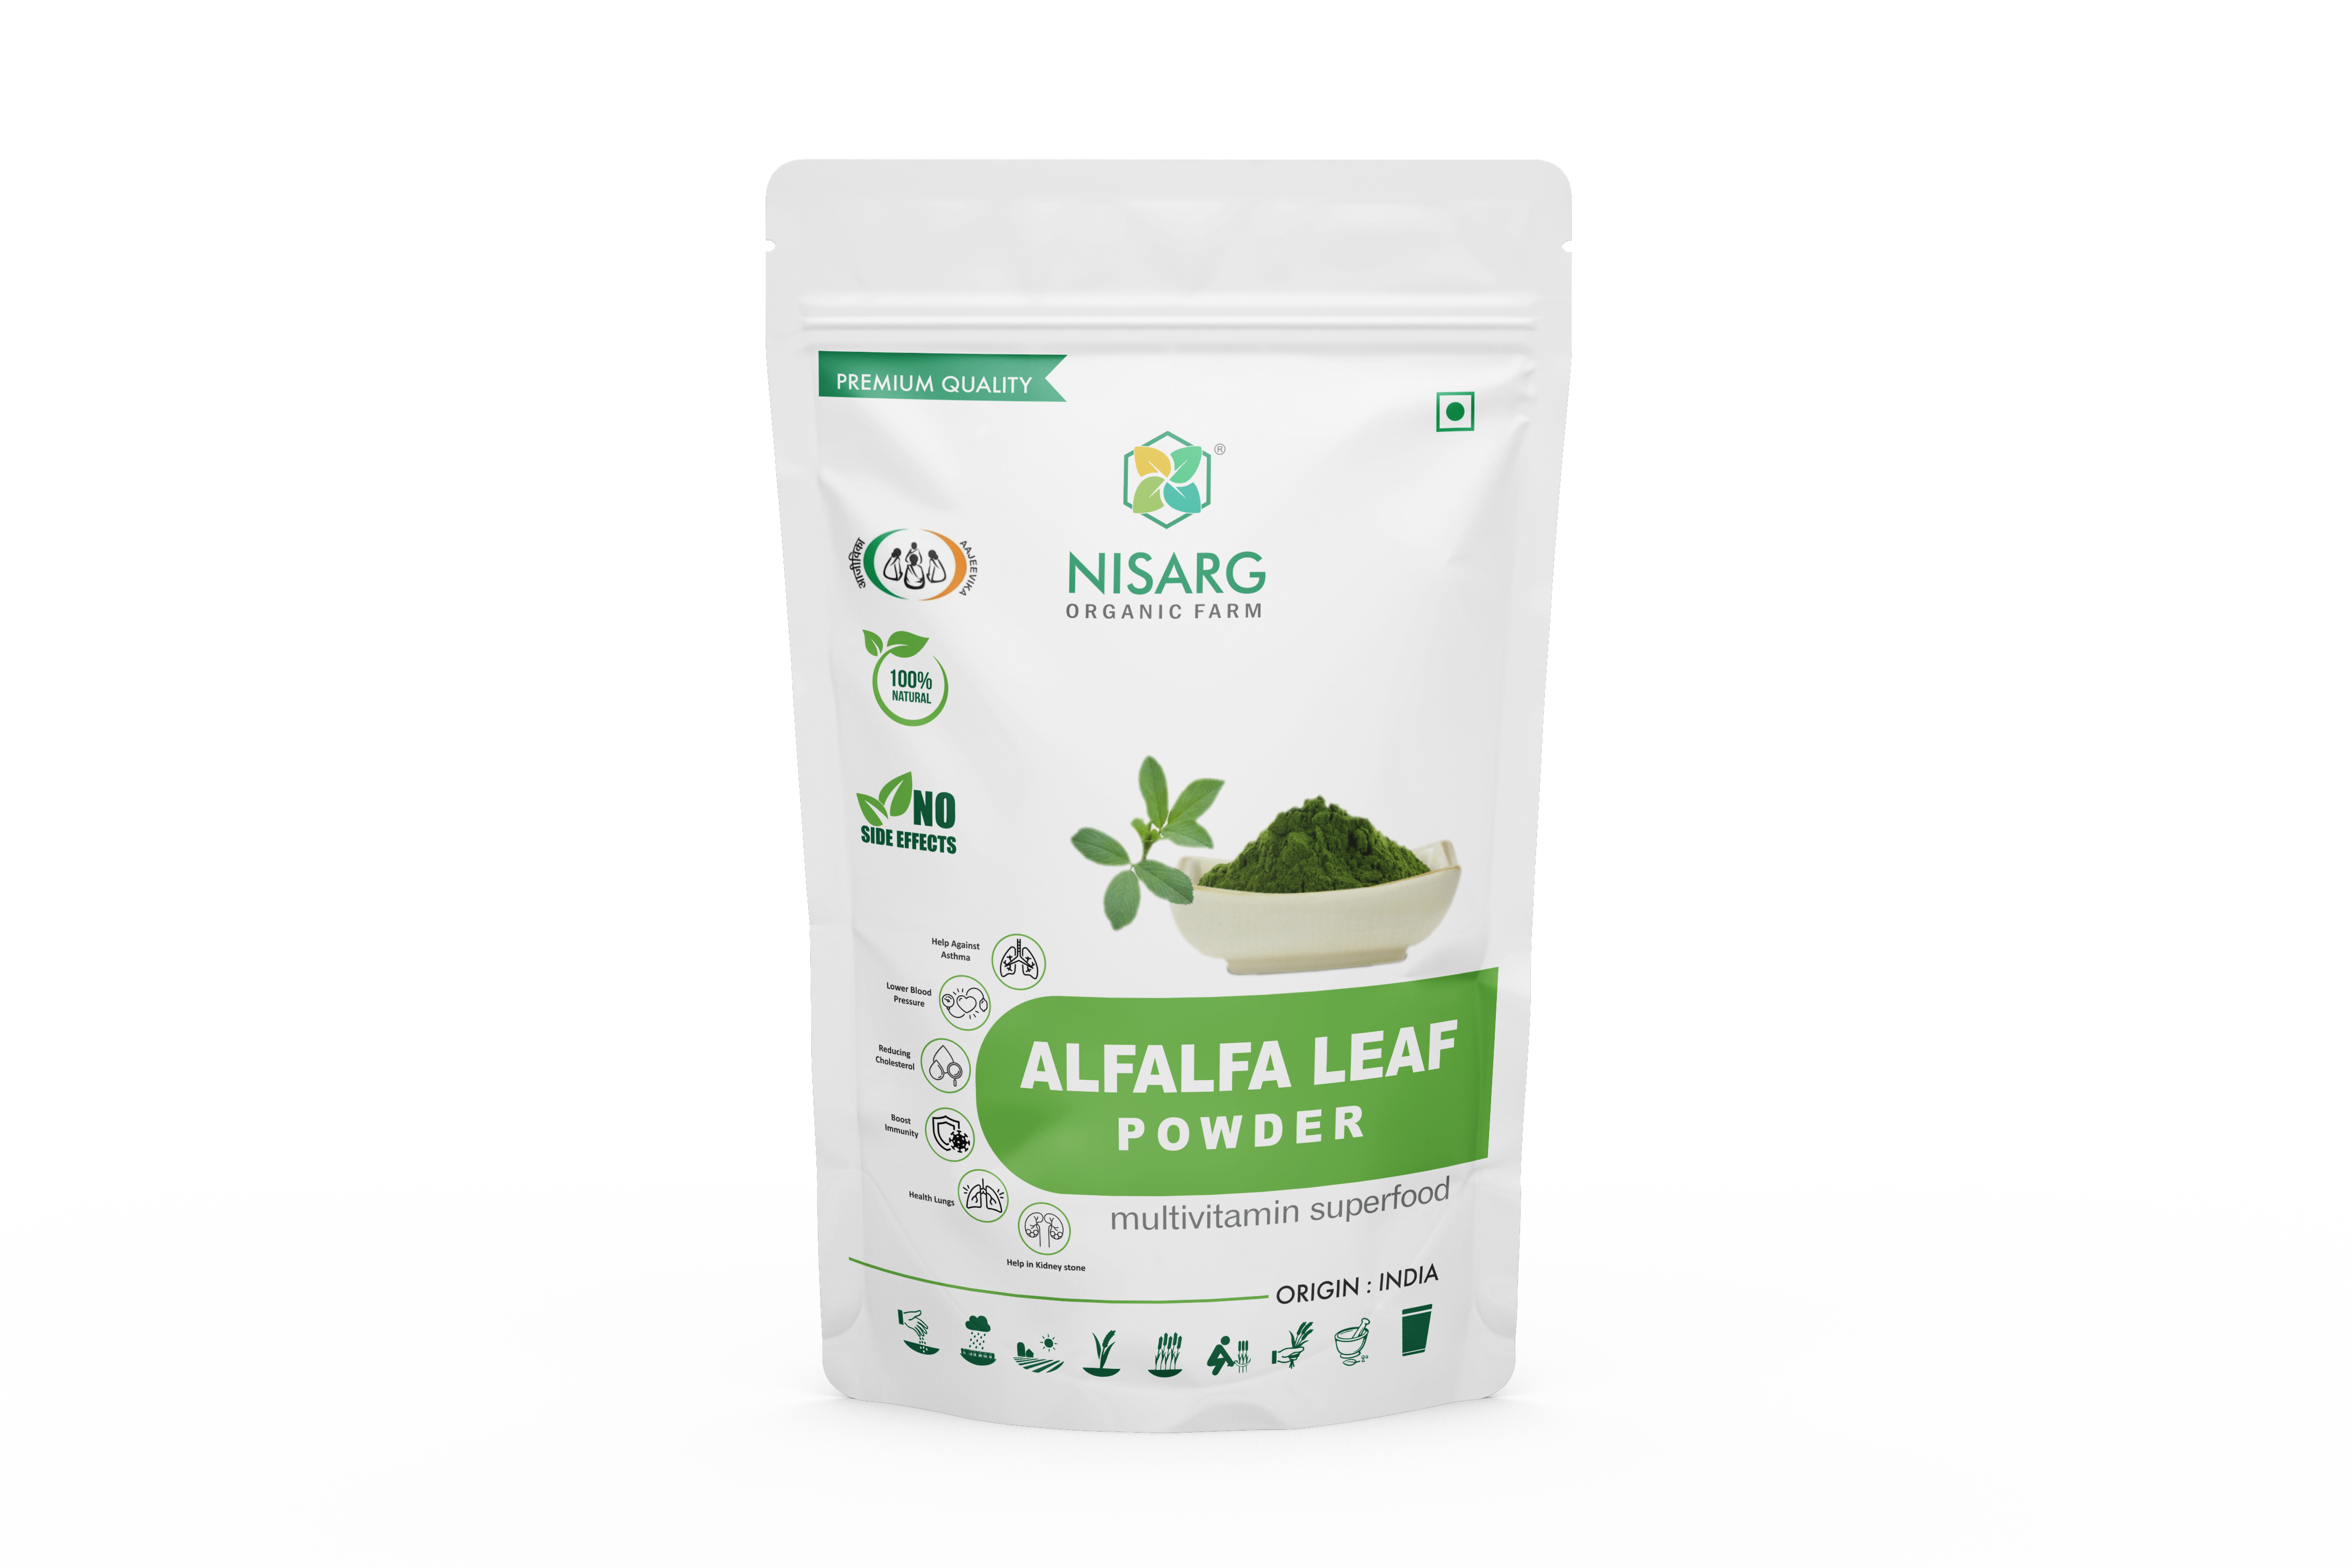 Product: Nisarg Alfalfa Leaf Powder